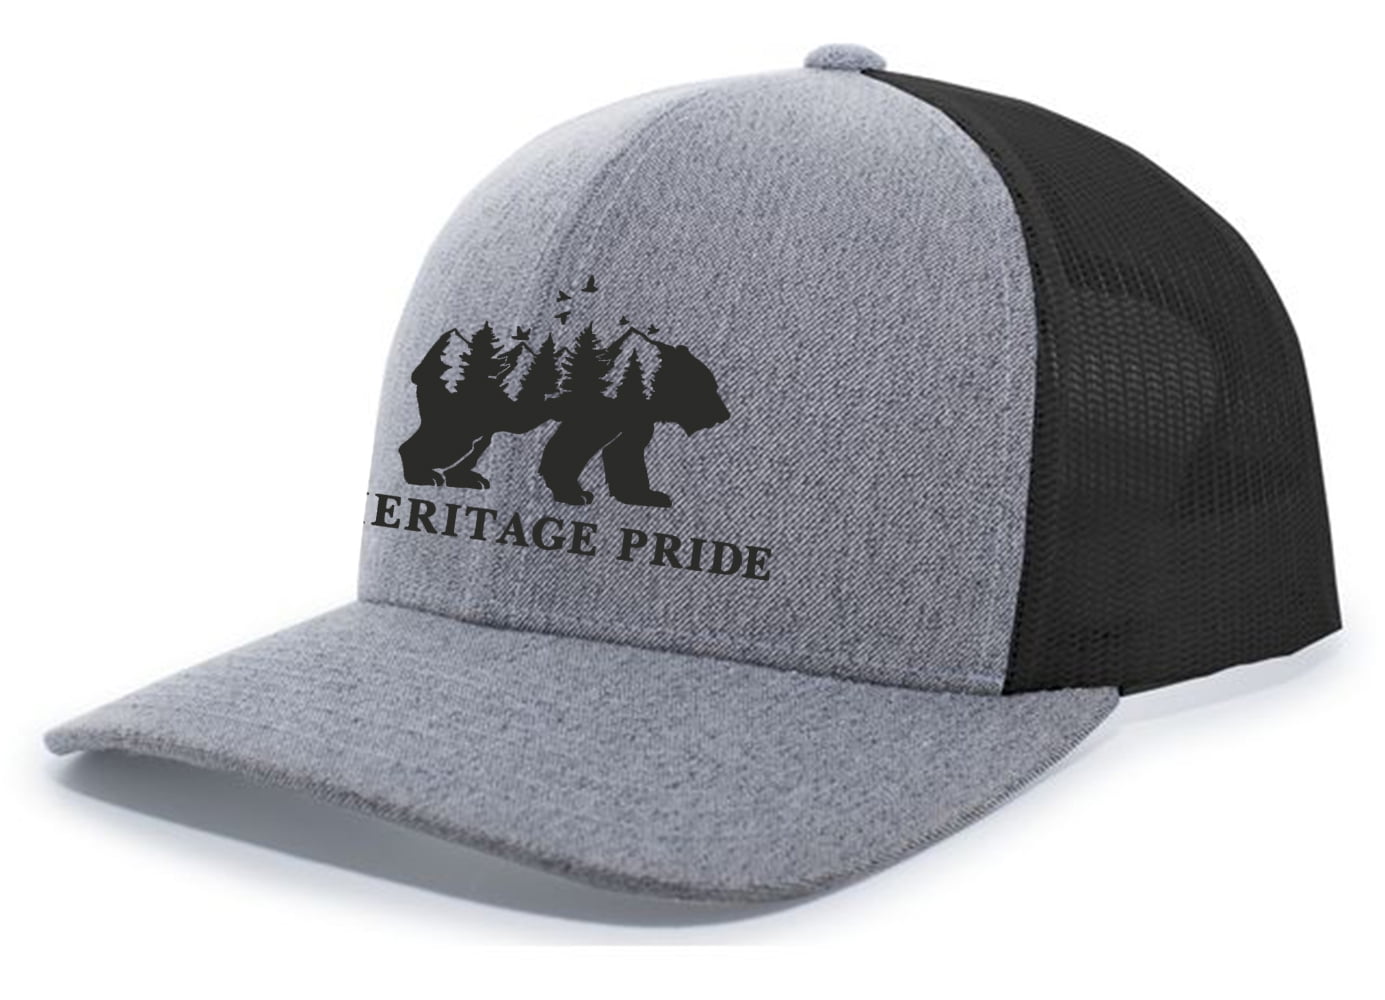 Heritage Pride Fishing Hook Outdoors Mens Embroidered Mesh Back Trucker Hat  Baseball Cap, Army/Black 